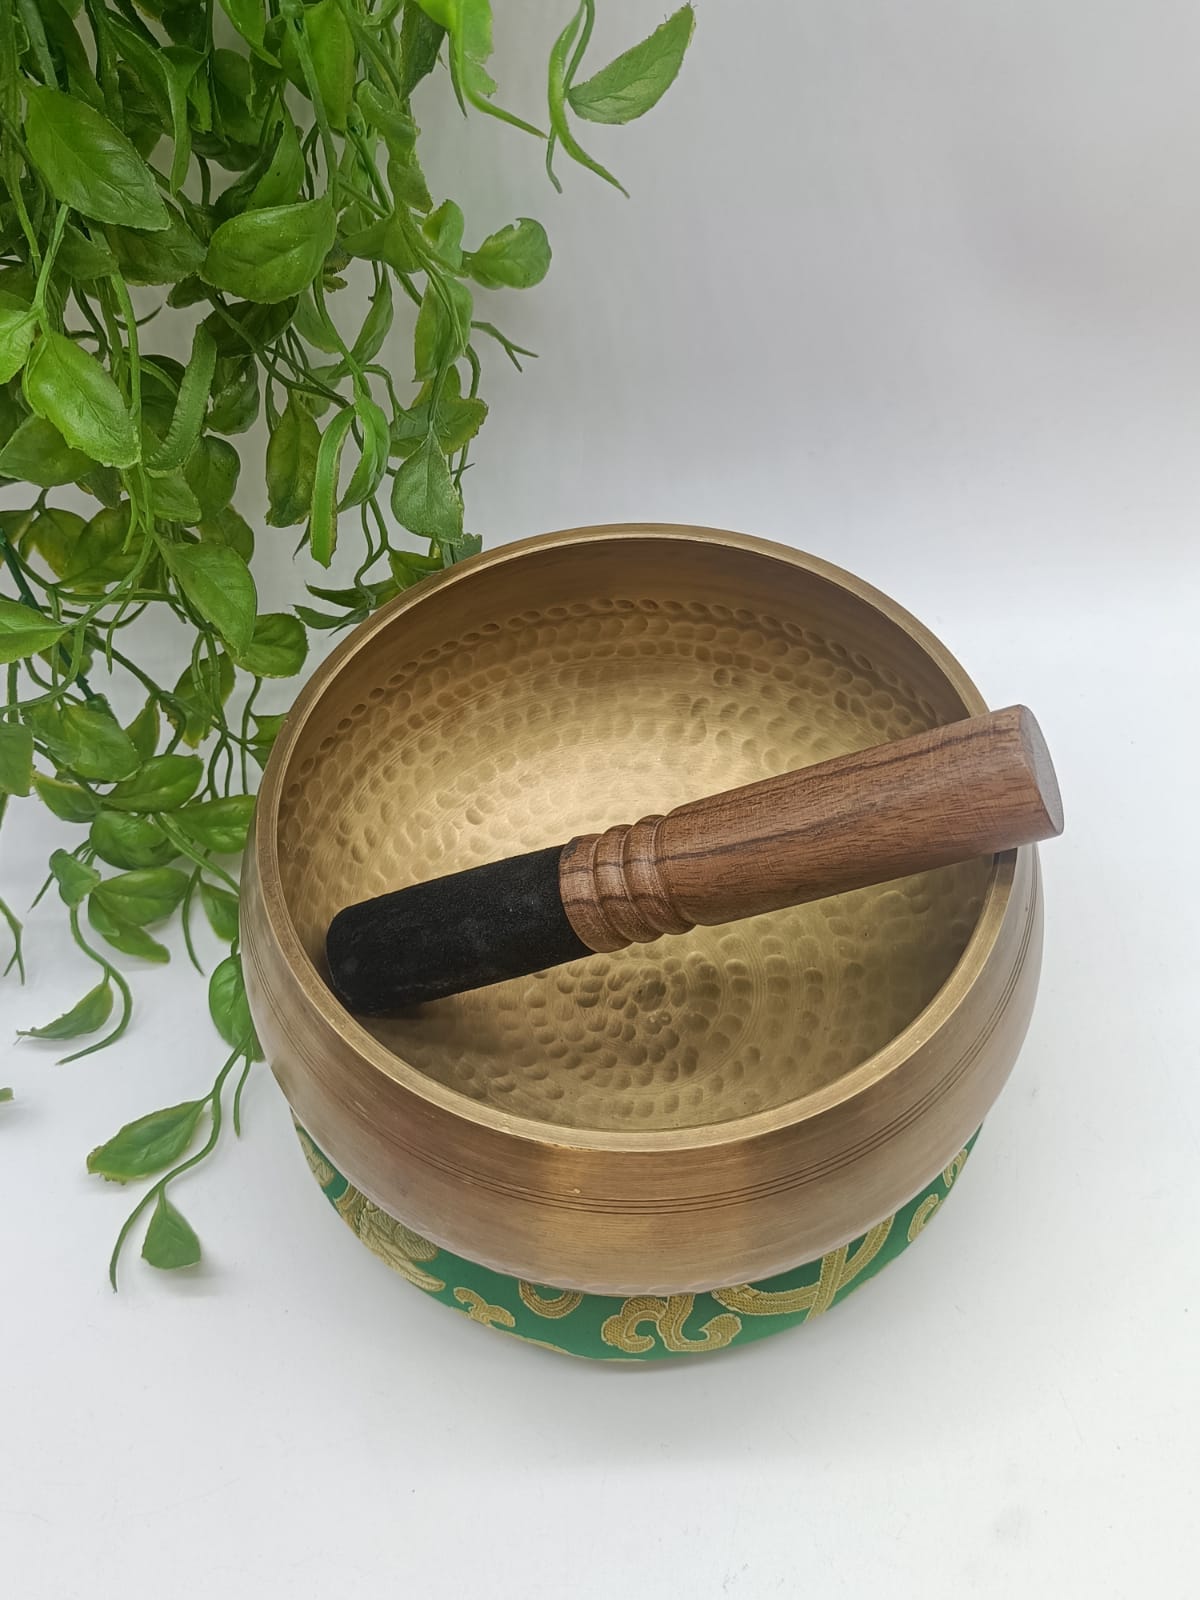 Tibetan Sound Healing Bowl 6.5 Inch E Note - Solar Plexus

